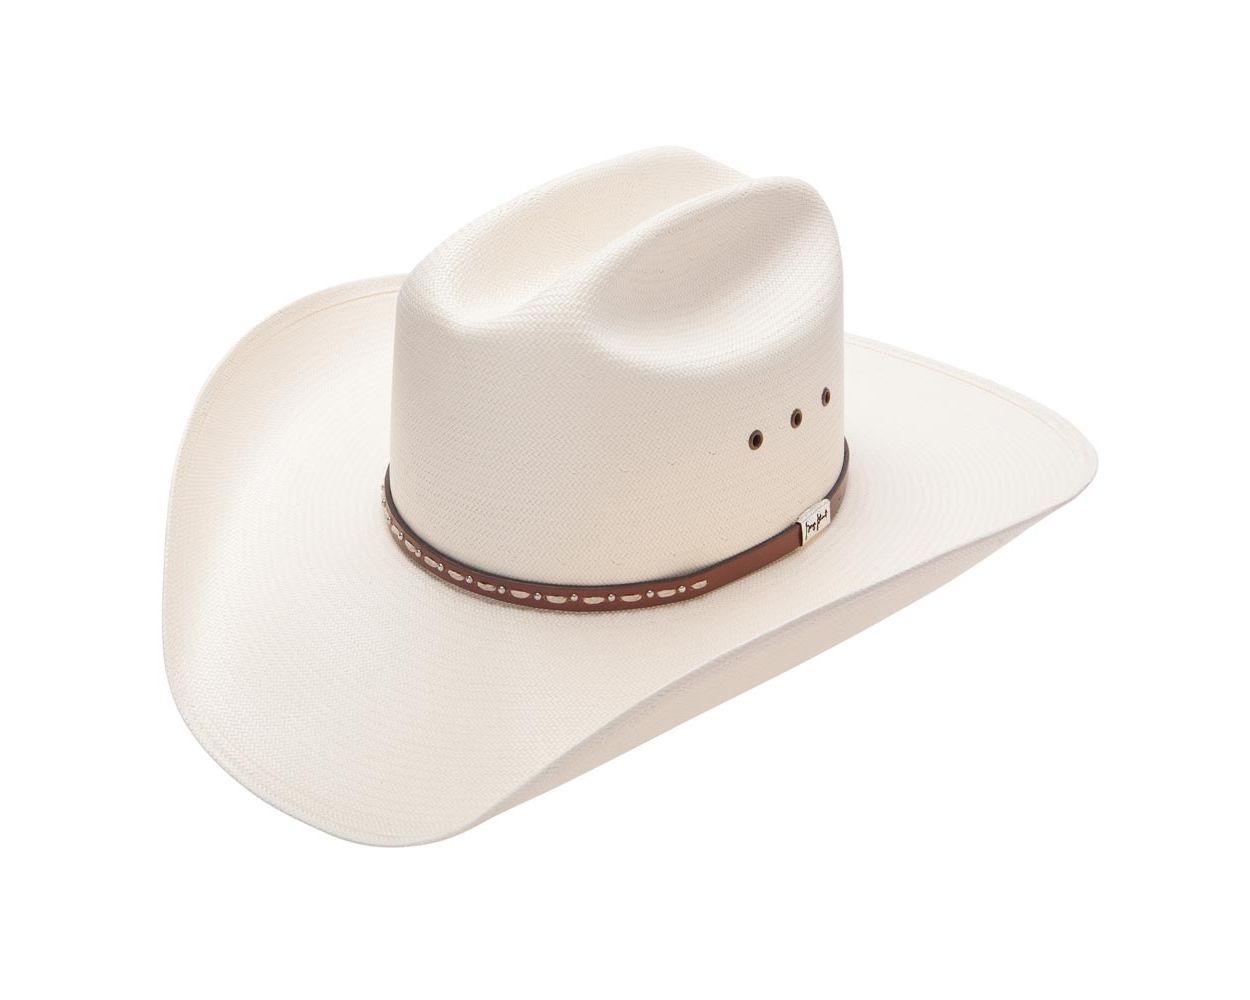 Resistol 10X George Strait Last Chance Straw Cowboy Hat